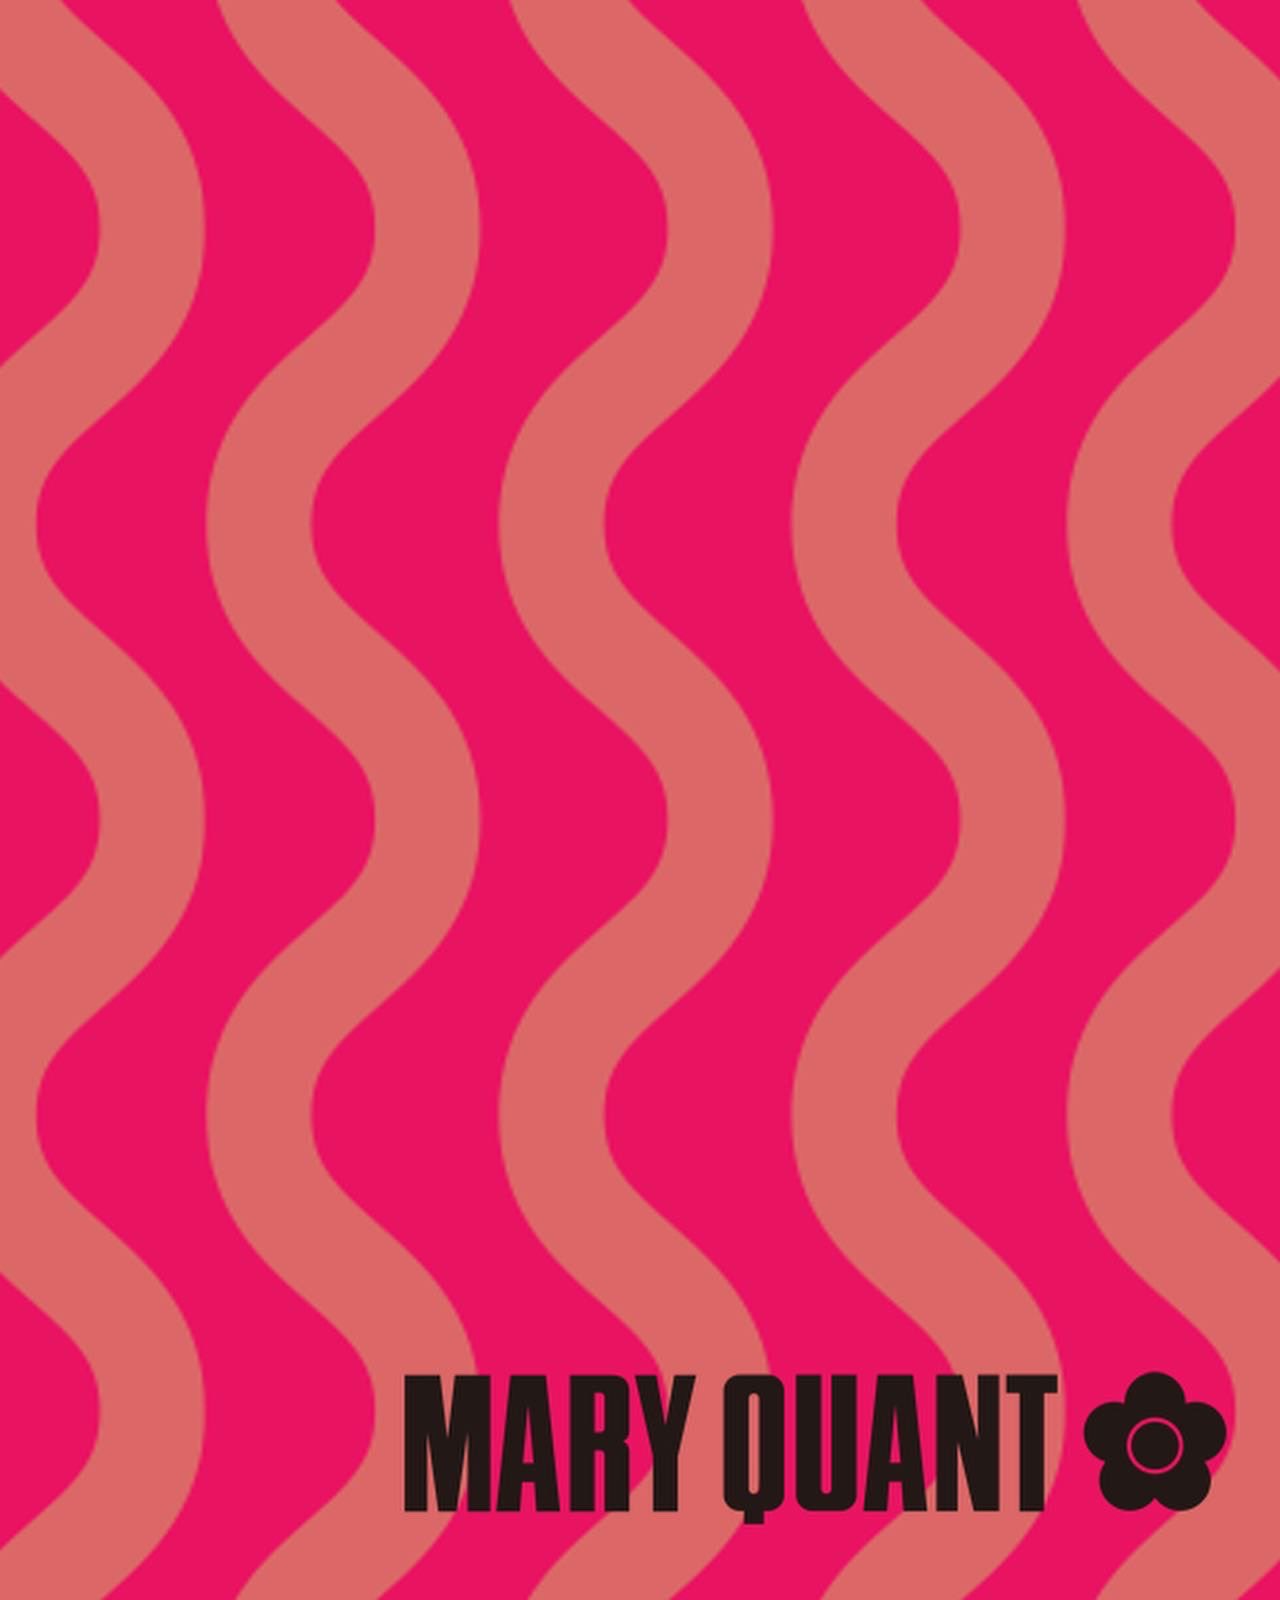 Mary Quant Official Pa Twitter Mary Quant展日本上陸記念 ブランドヒストリー5月分をご紹介 T Co Mgmt8q8jaq 画像は当時マリーがデザインしたインテリア関連のカタログ表紙と家族 本人 夫と愛息 公式lineアカウント Maryquant では5月オリジナル